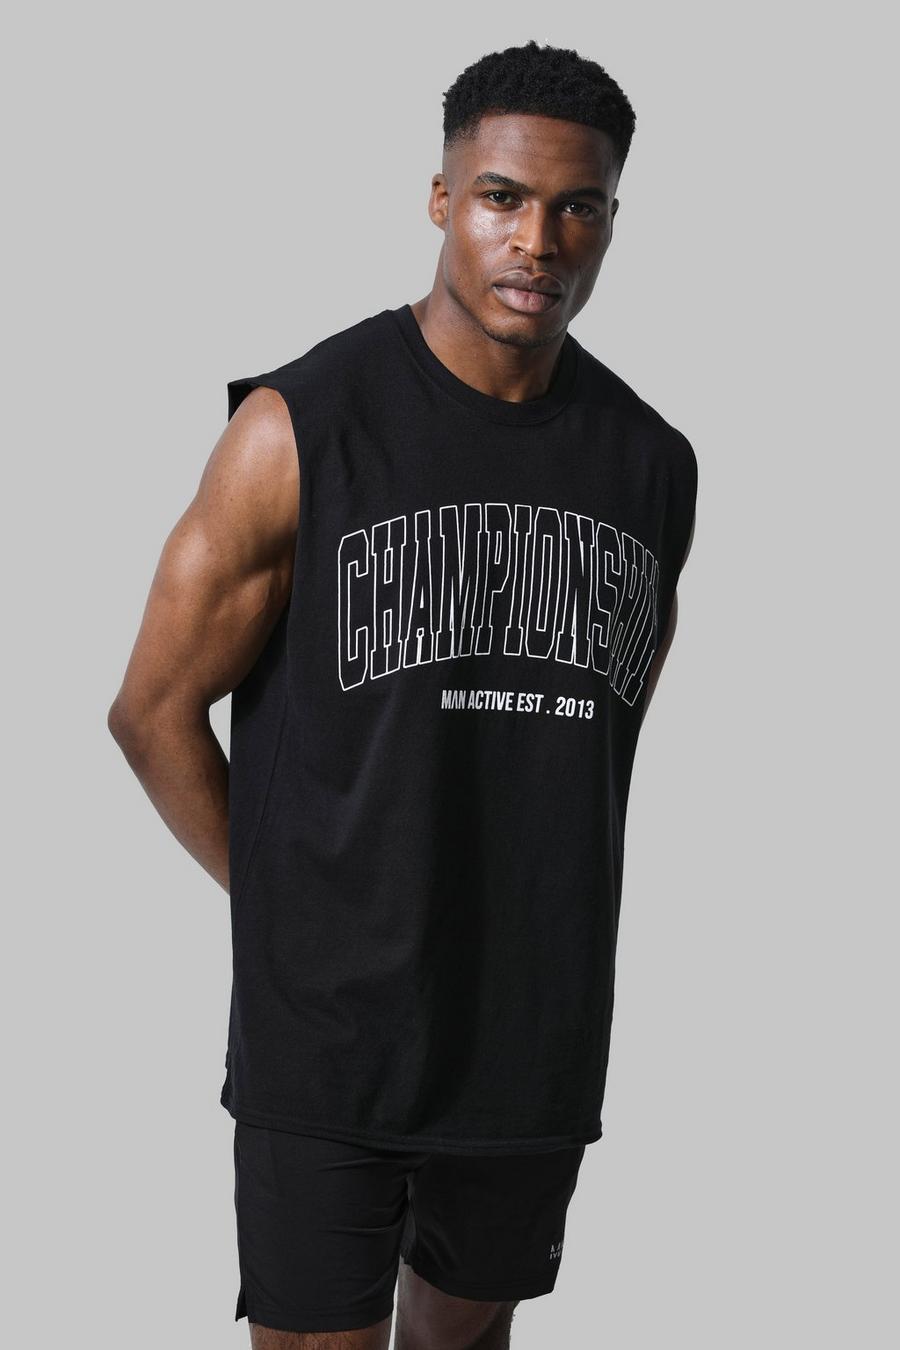 Man Active Gym Championship Tanktop, Black